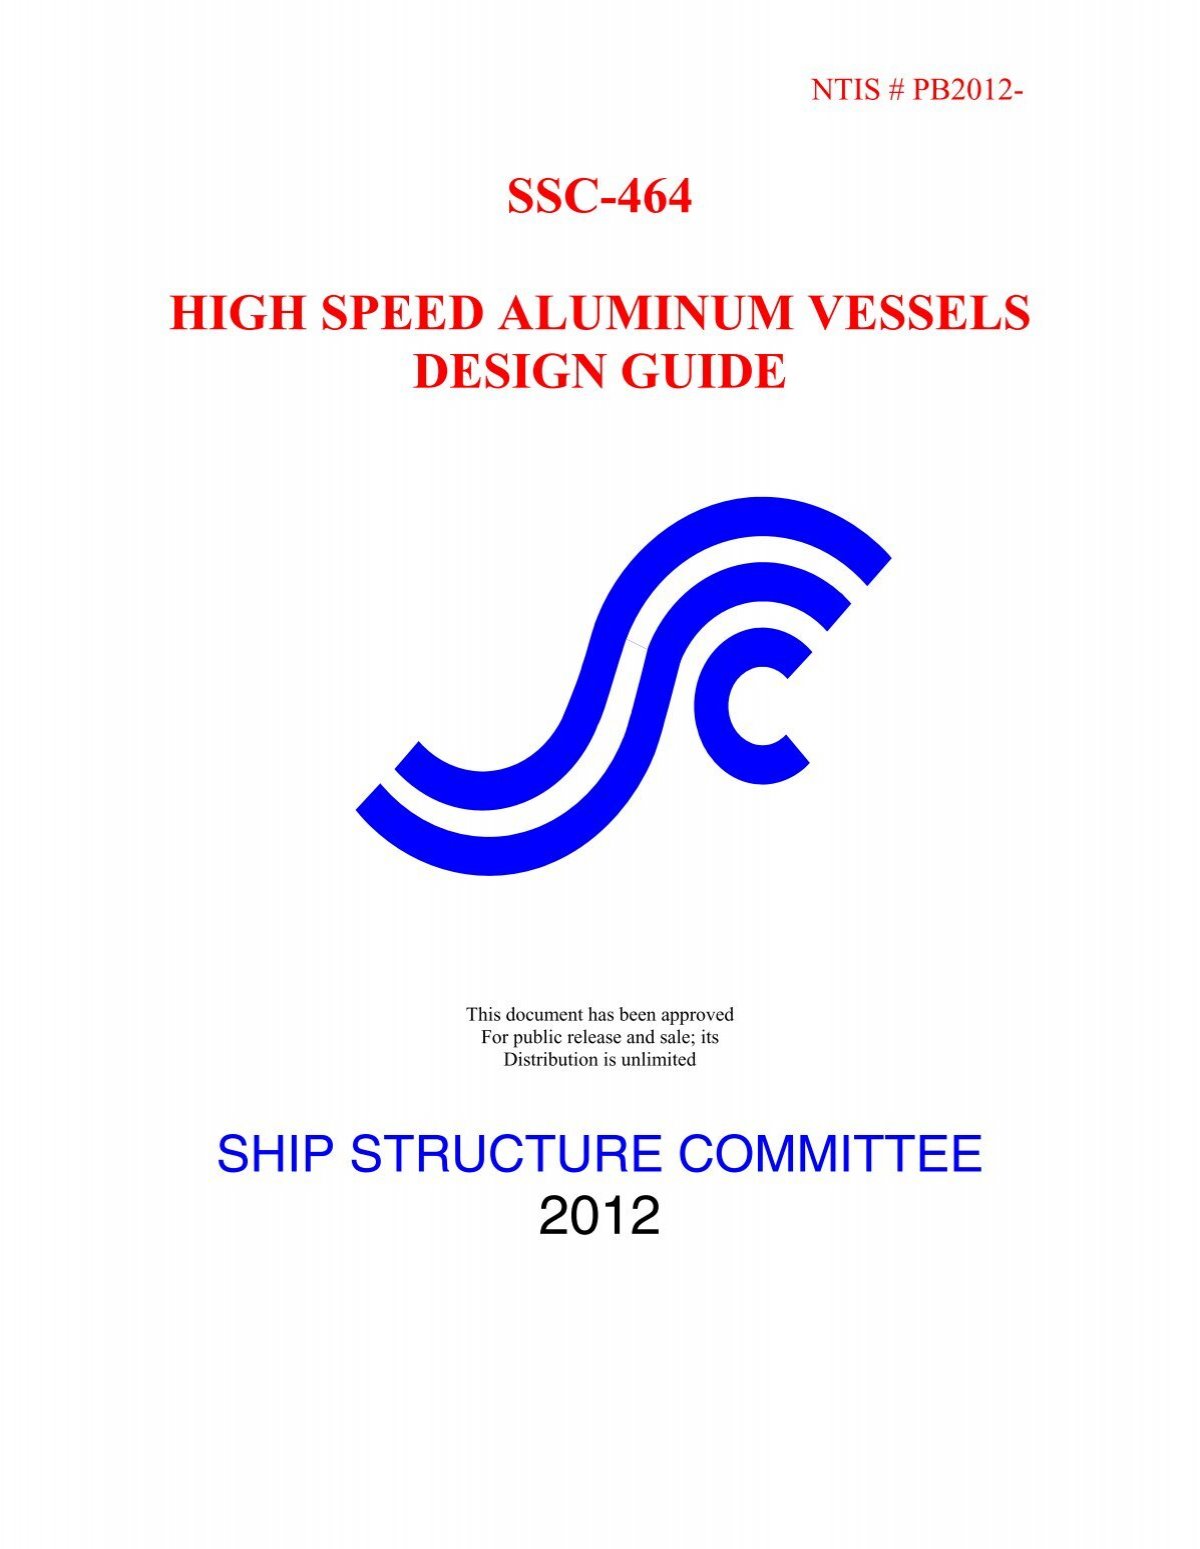 ssc-464 high speed aluminum vessels design guide ship structure